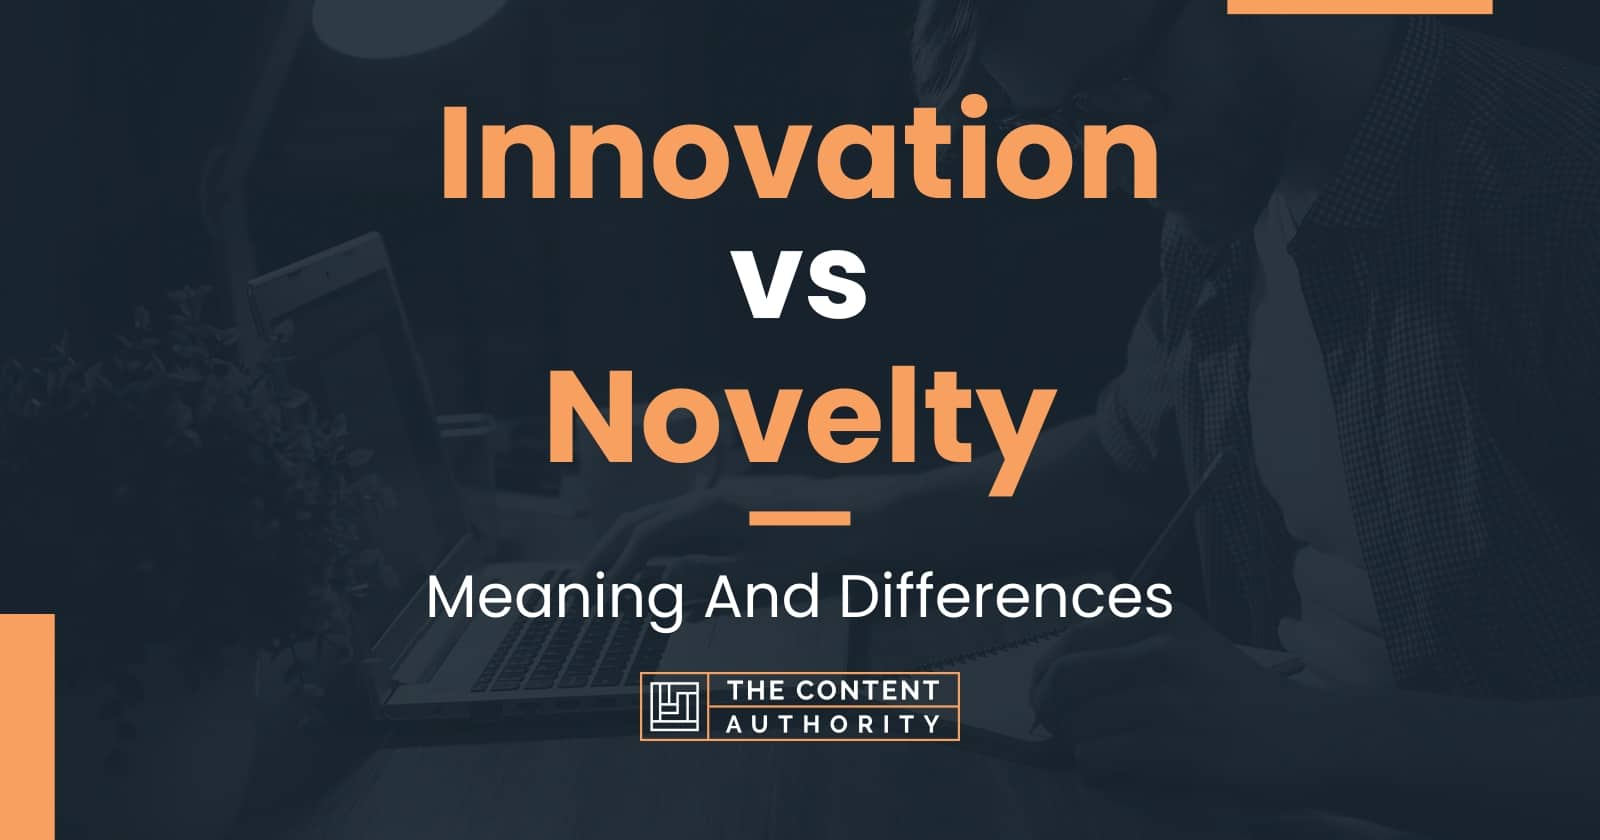 Innovation novelty and impact